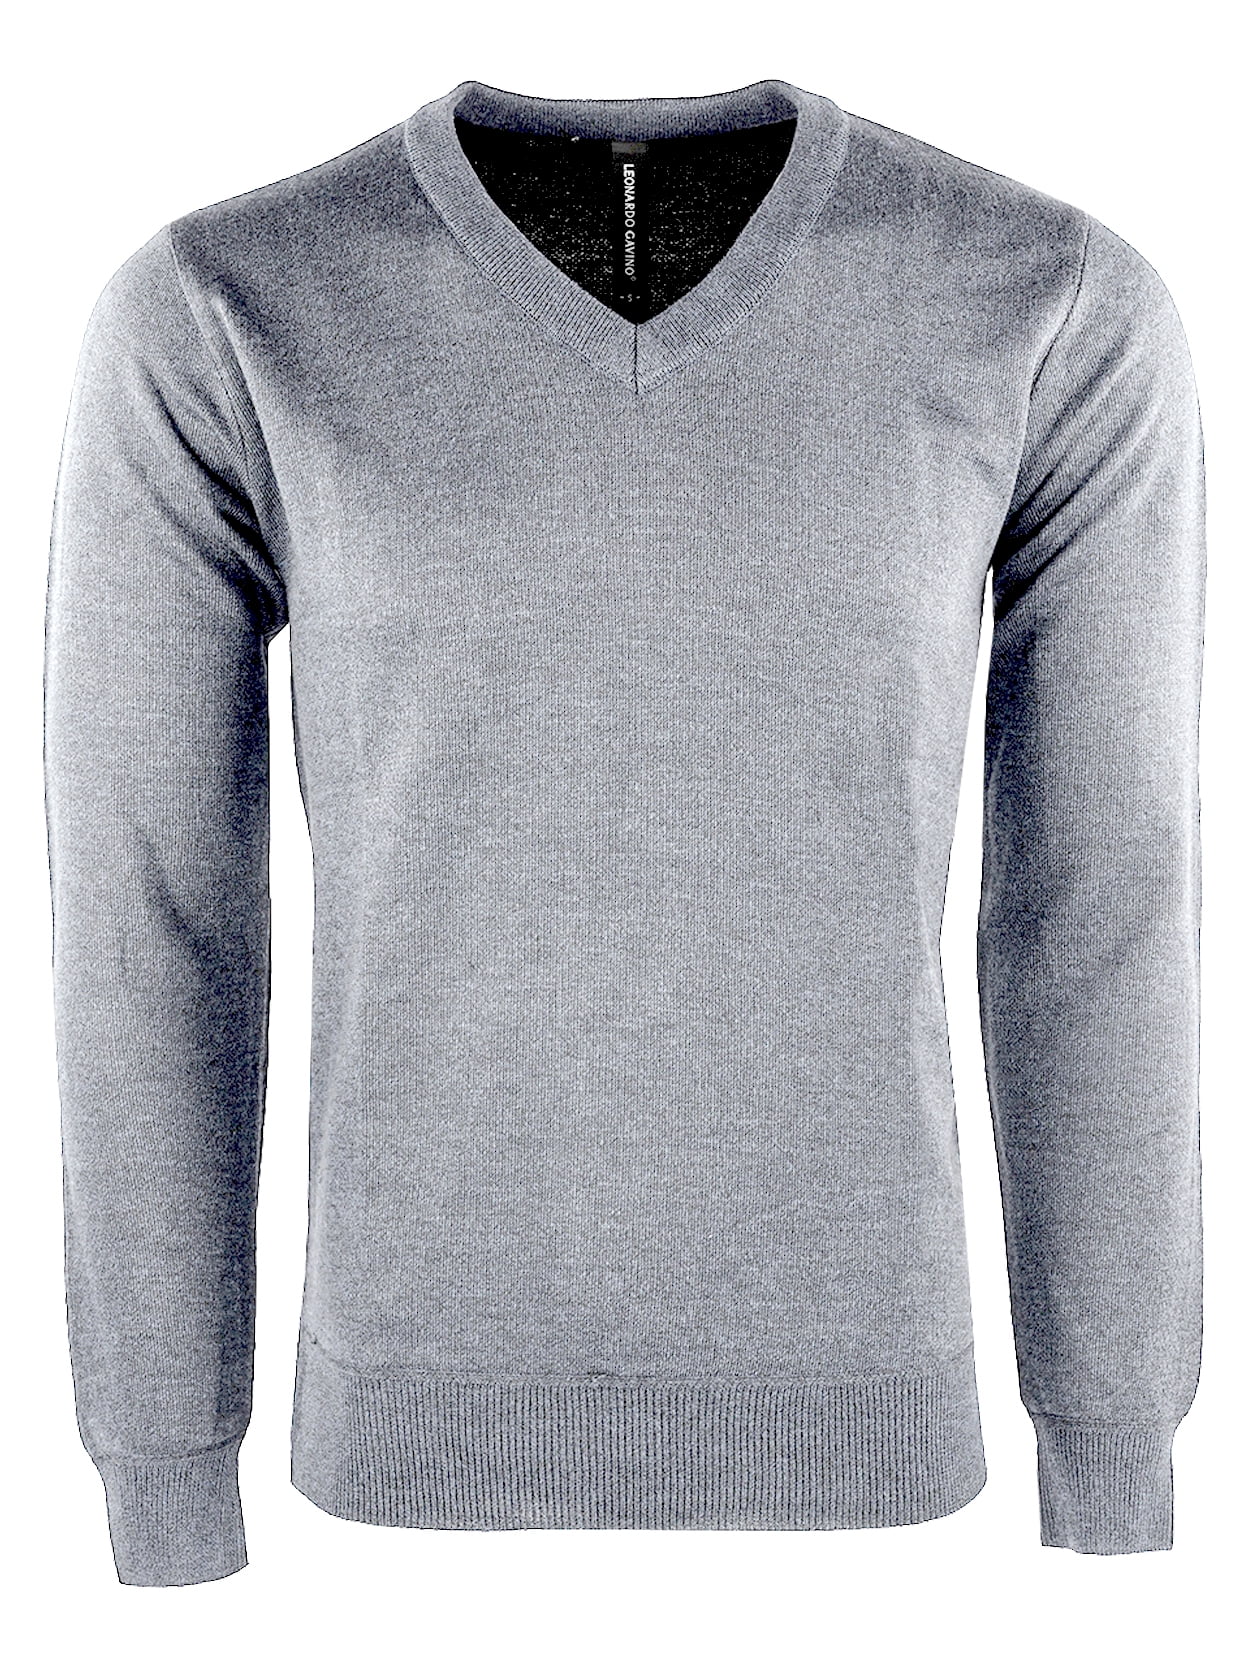 Leonardo Gavino Men's V-Neck Golf Sweater, Small Gray - - Walmart.com